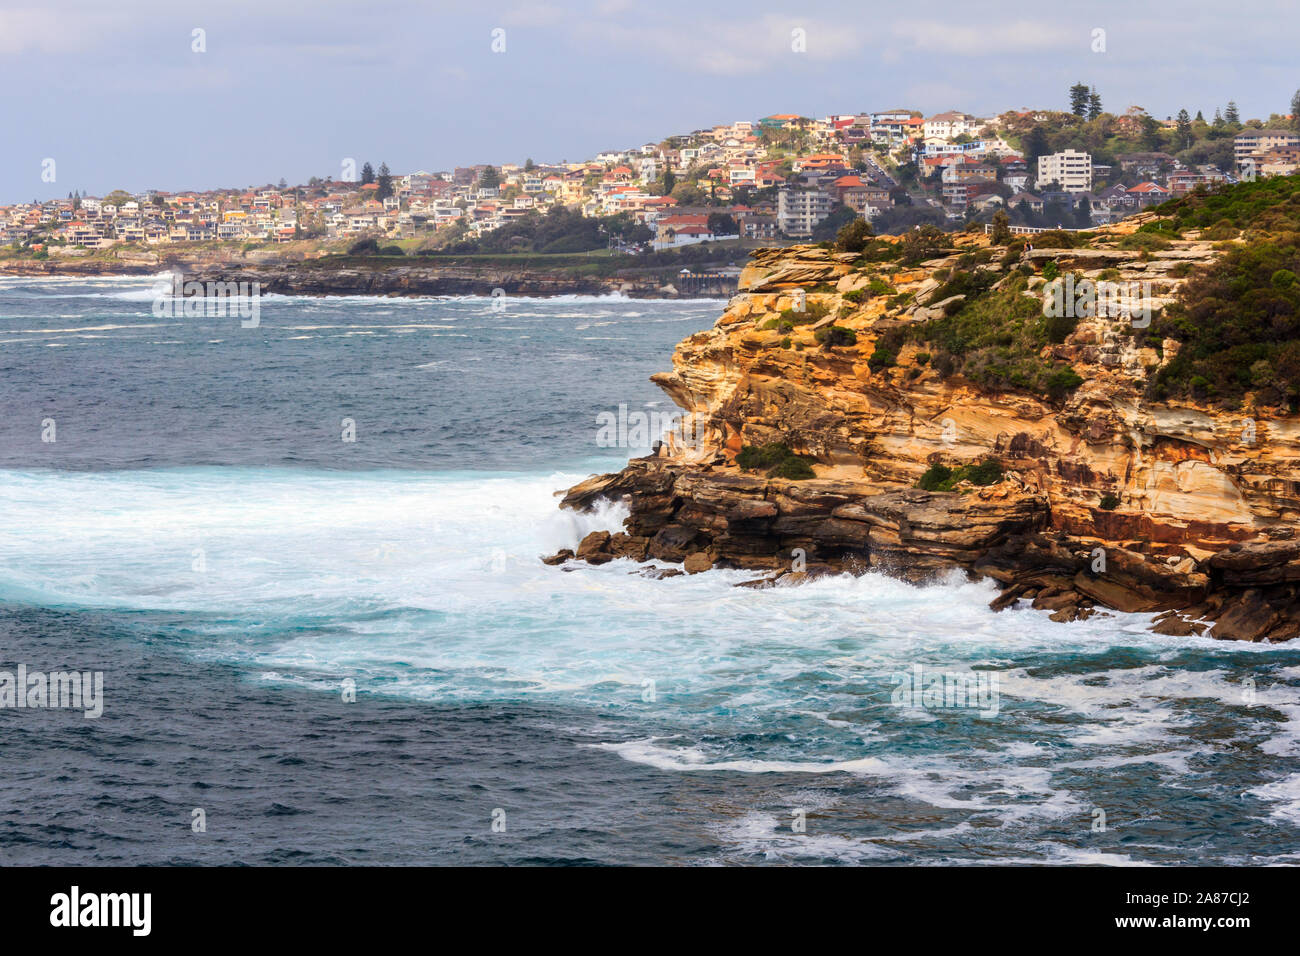 View of rocky coastline near Coogee, Sydney, Australia Stock Photo